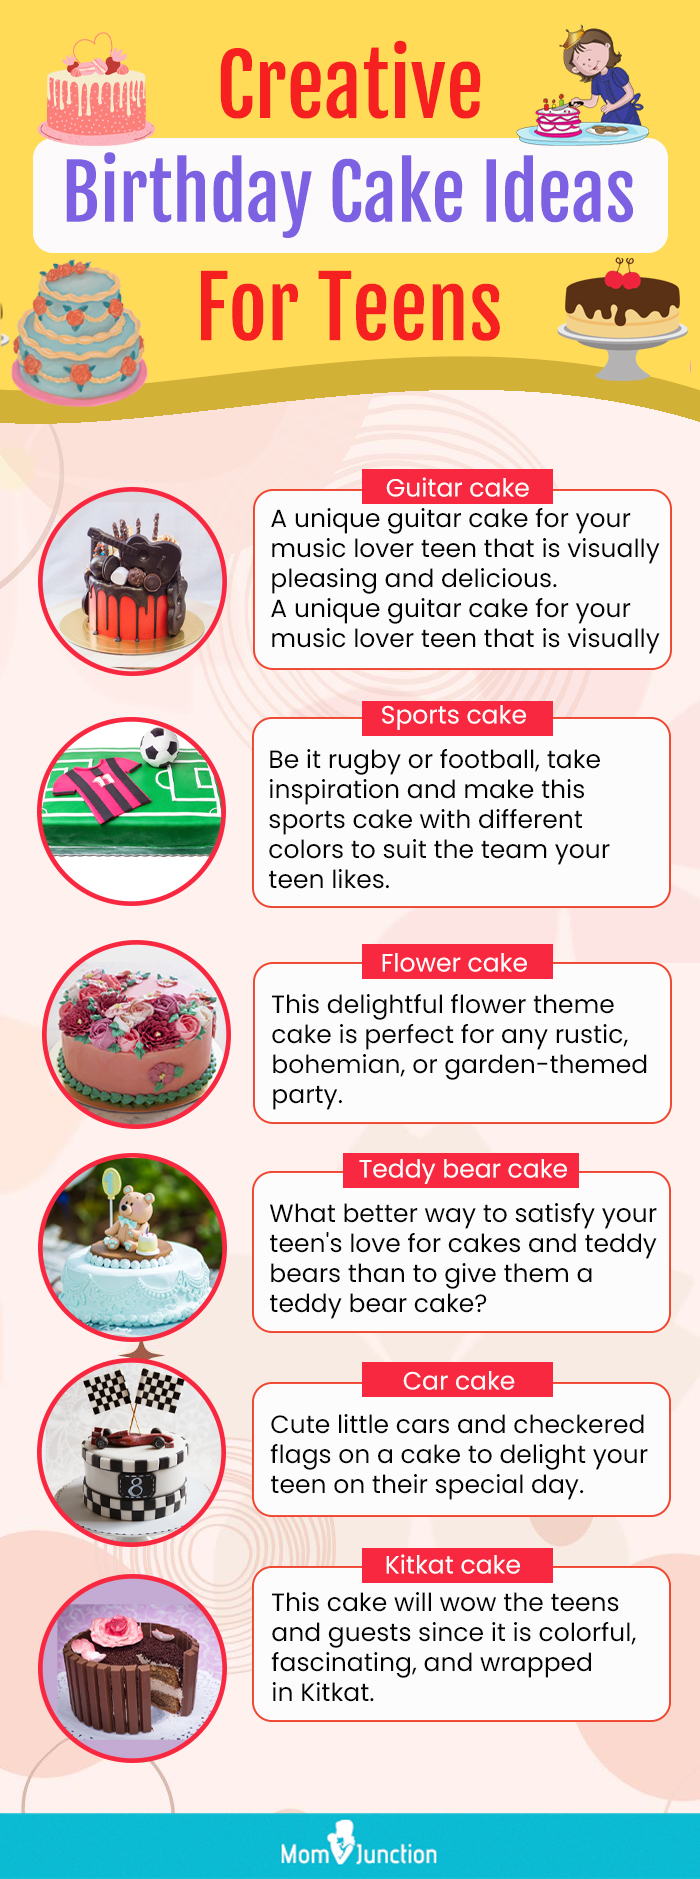 creative birthday cake ideas for teens (infographic)